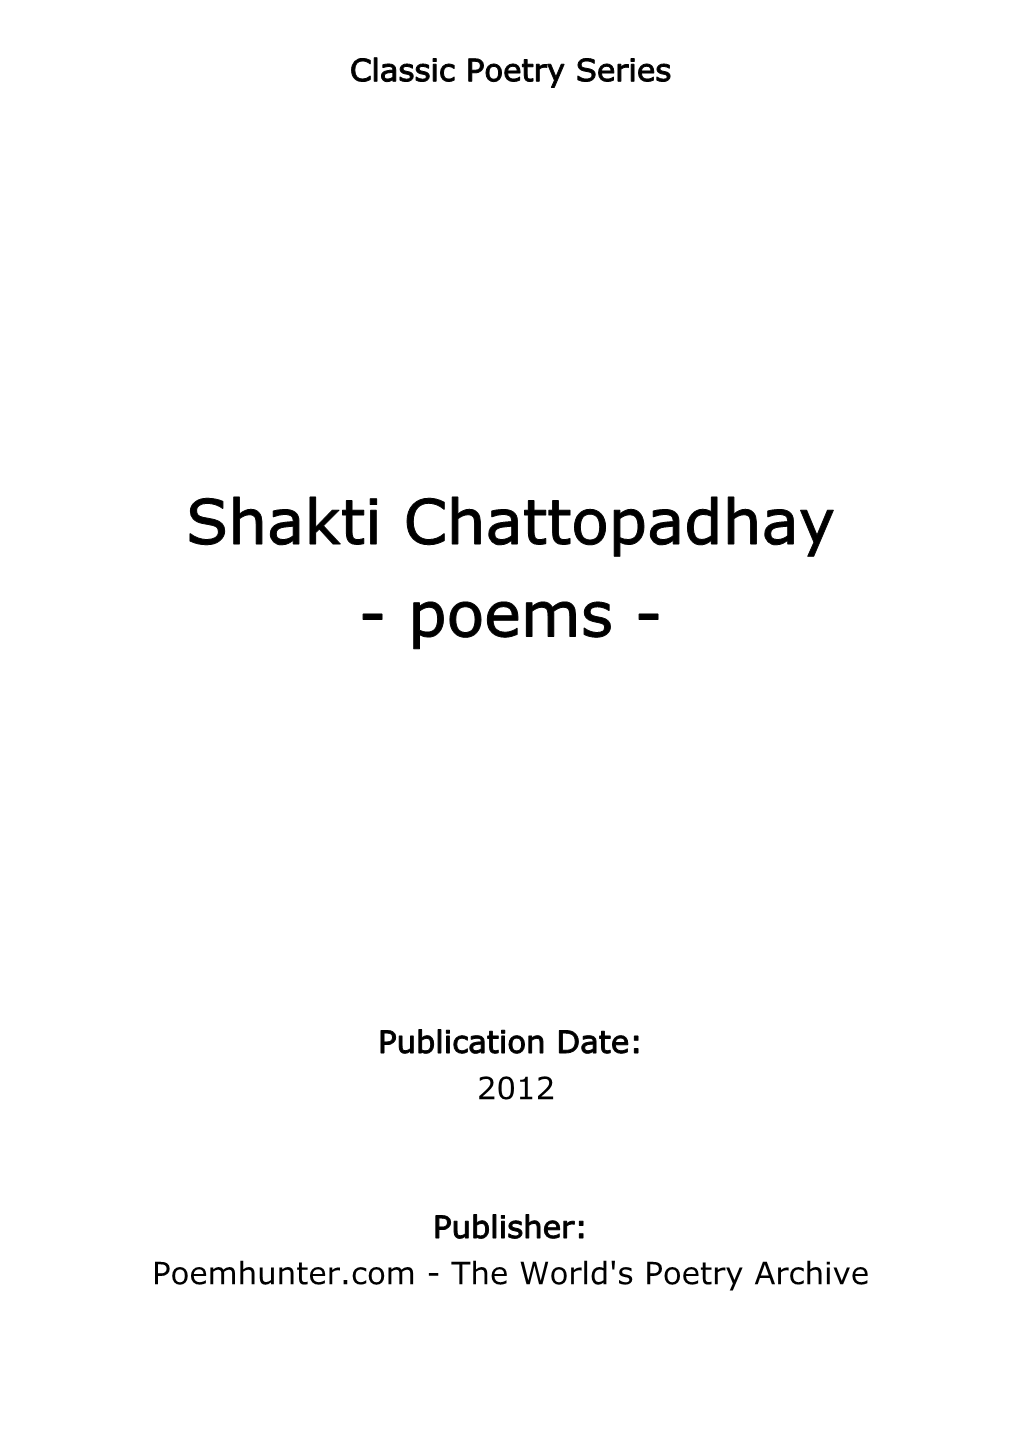 Shakti Chattopadhay - Poems